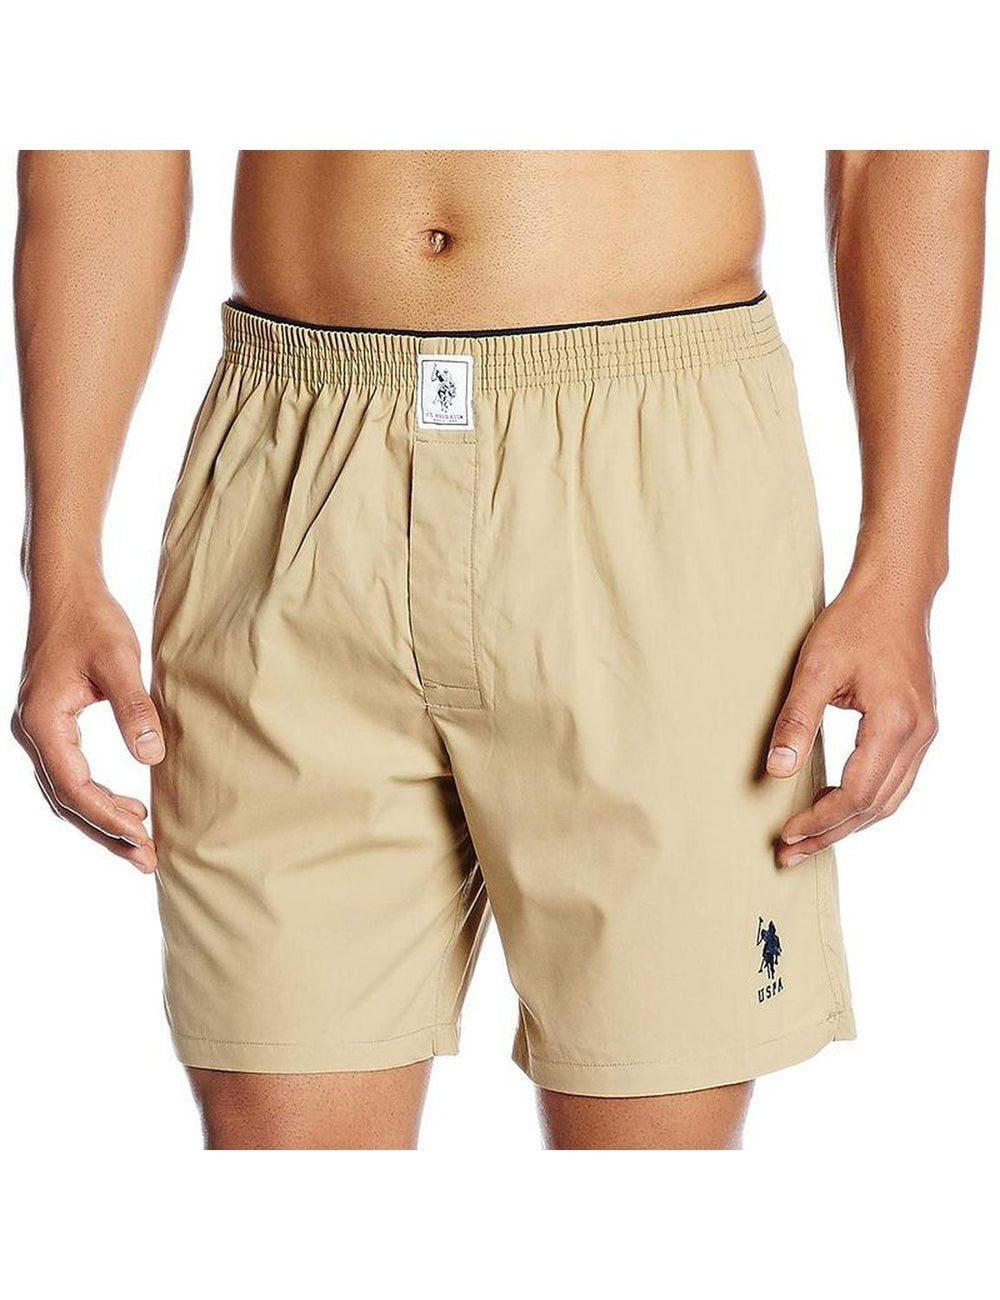 US Polo Brown Cotton Boxer Shorts for Men